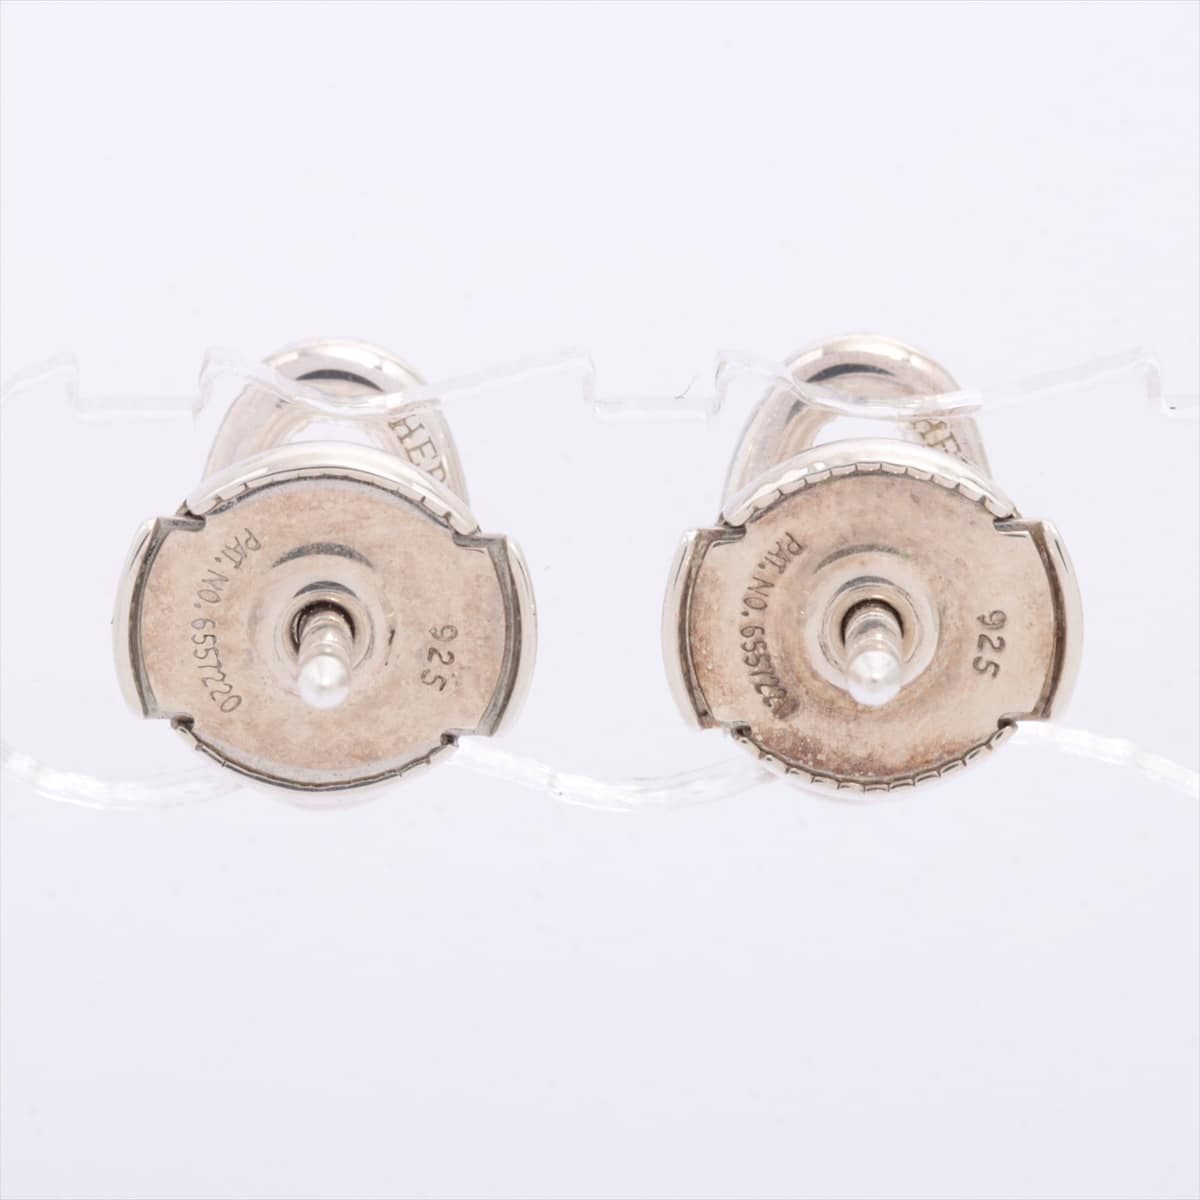 Hermès Chaîne d'Ancre Piercing jewelry (for both ears) 925 1.6g Silver